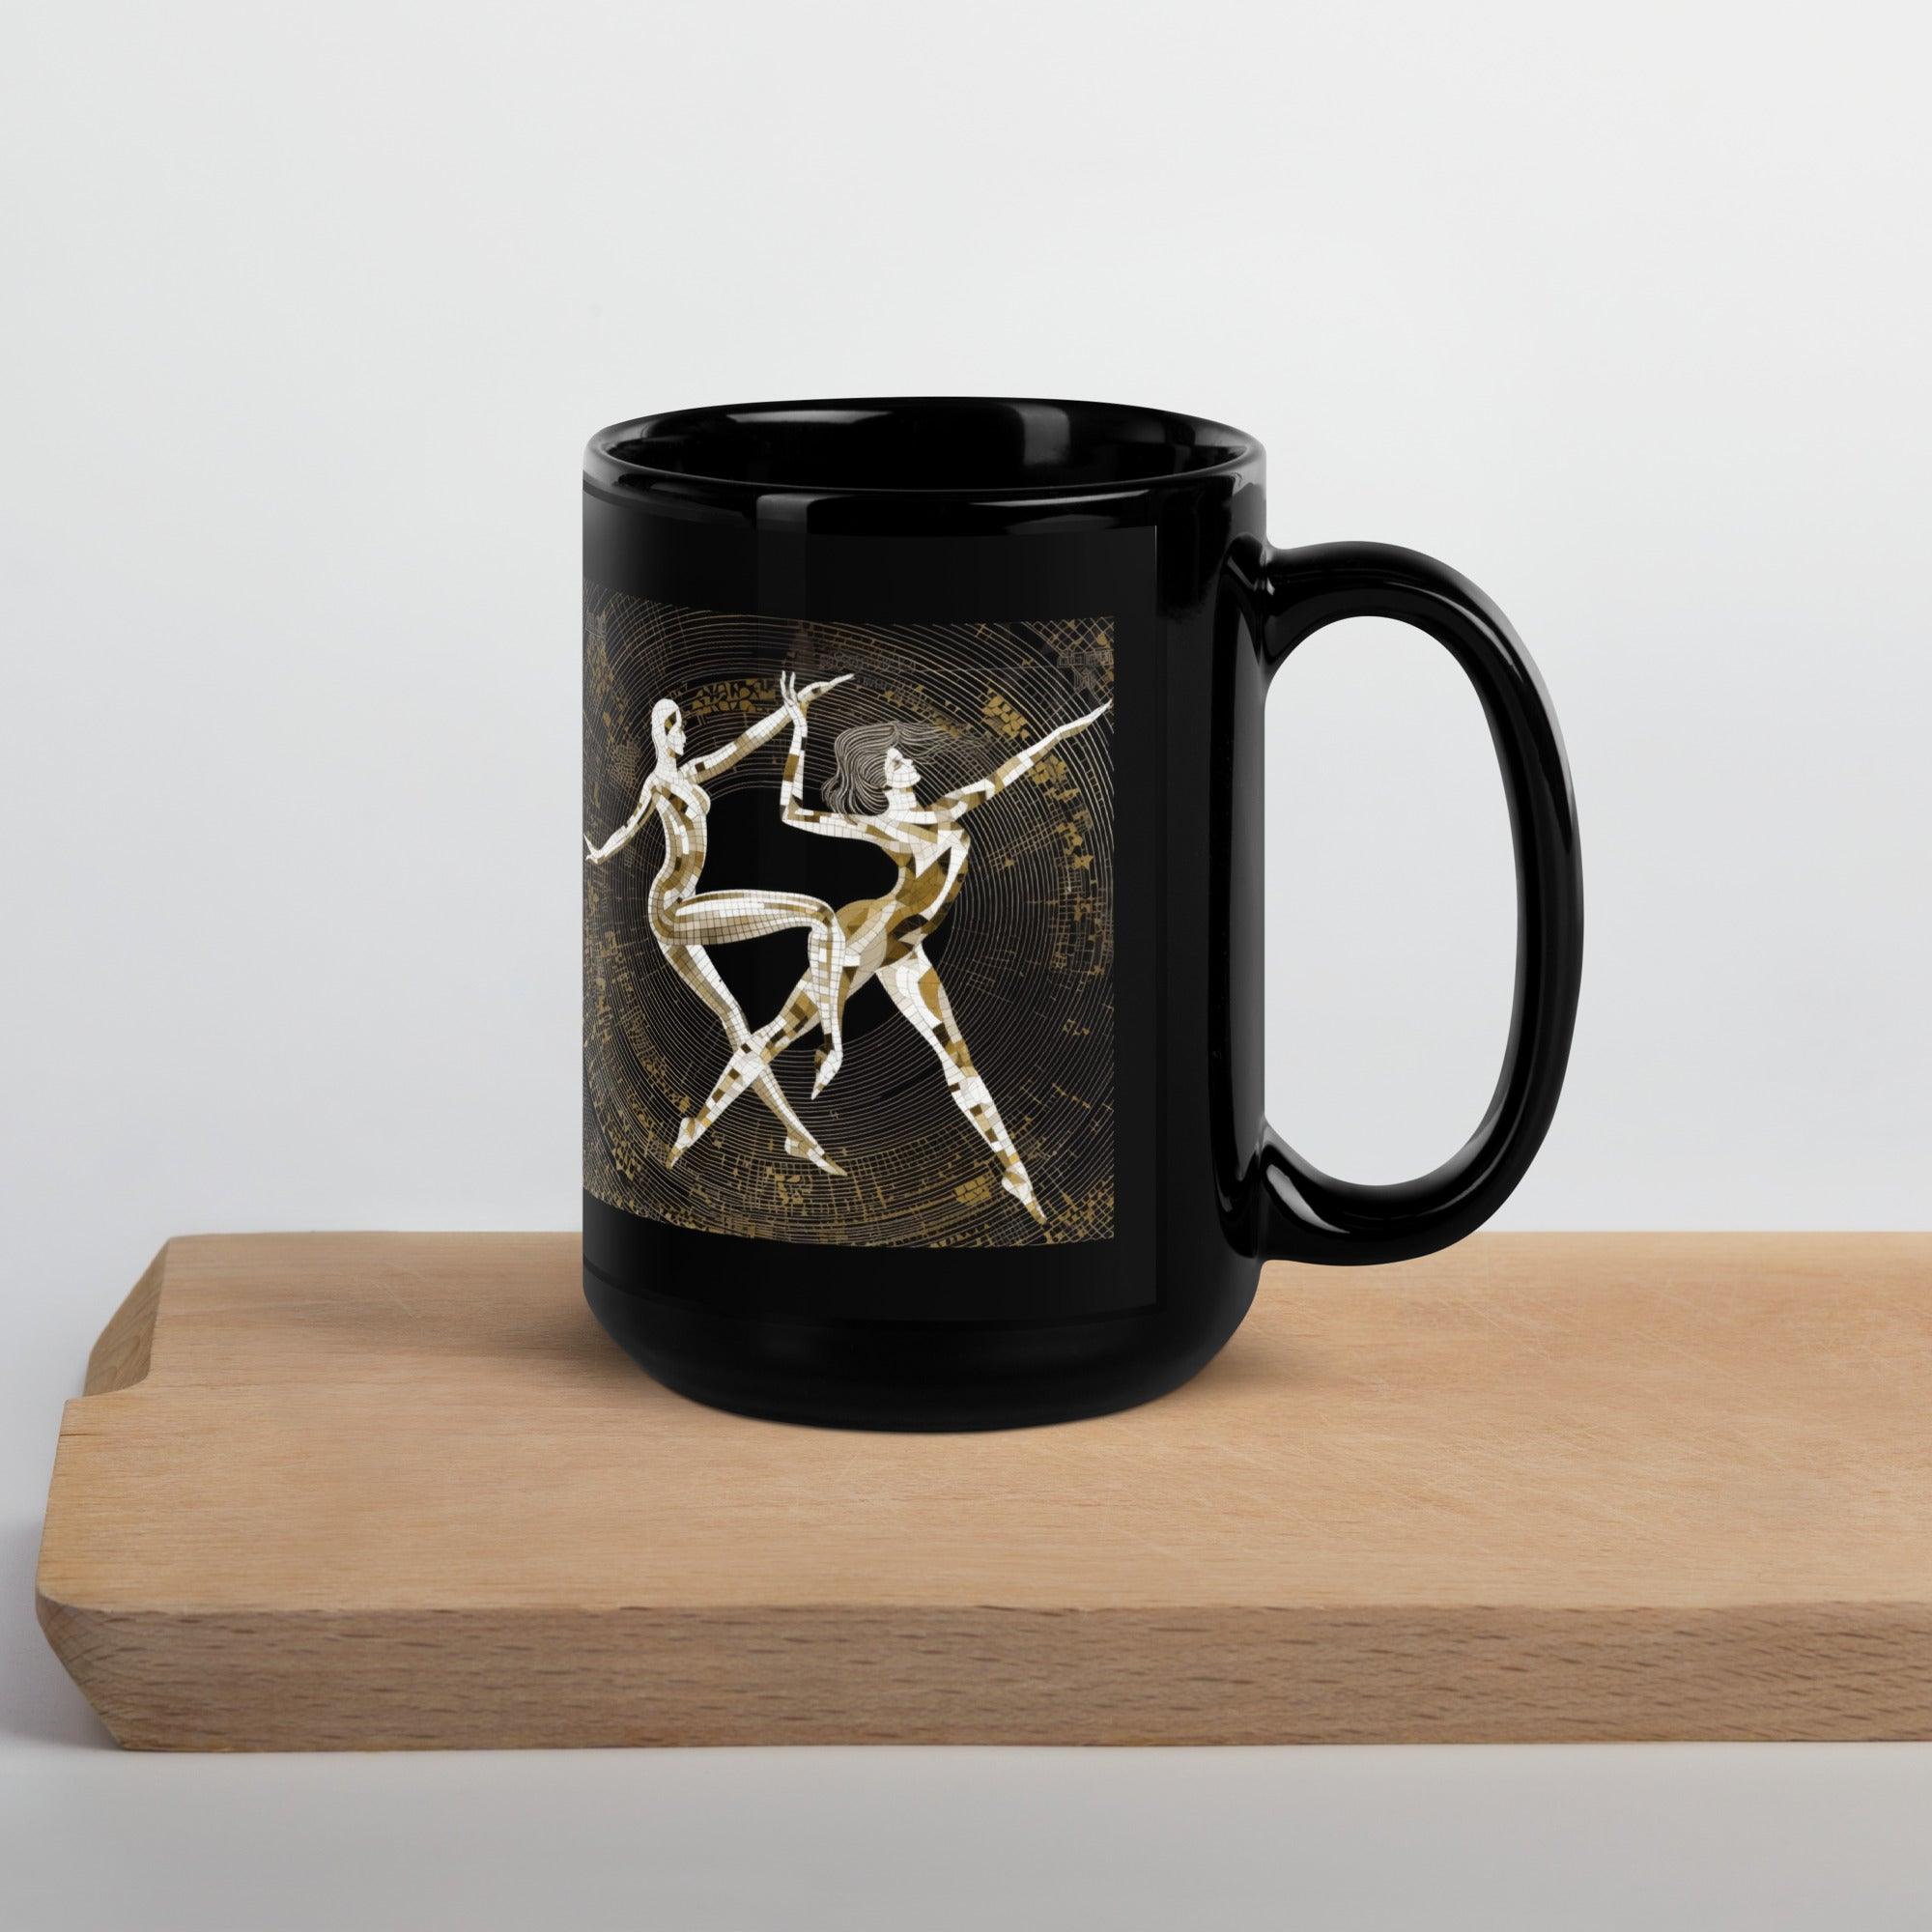 Close-up of a black mug featuring balletic extravaganza artwork